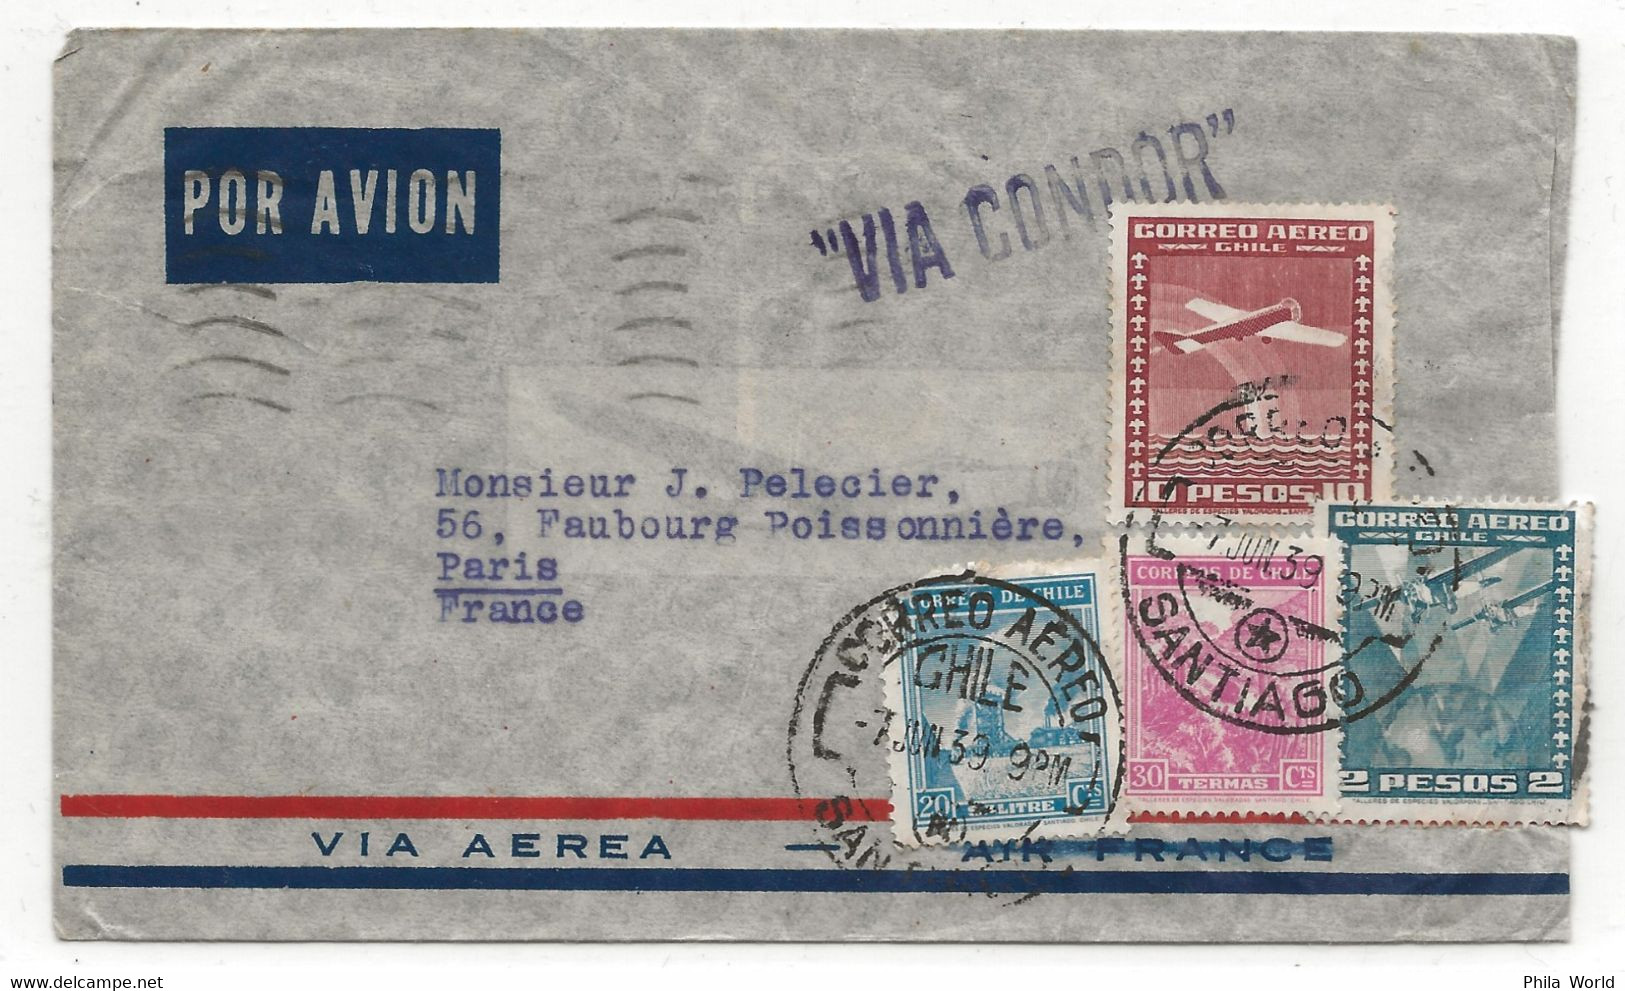 CONDOR LUFTHANSA 1939 CHILI Chile CORREO AEREO POR AVION > Paris FRANCE Air Mail Cover Via MARSEILLE GARE - Avions